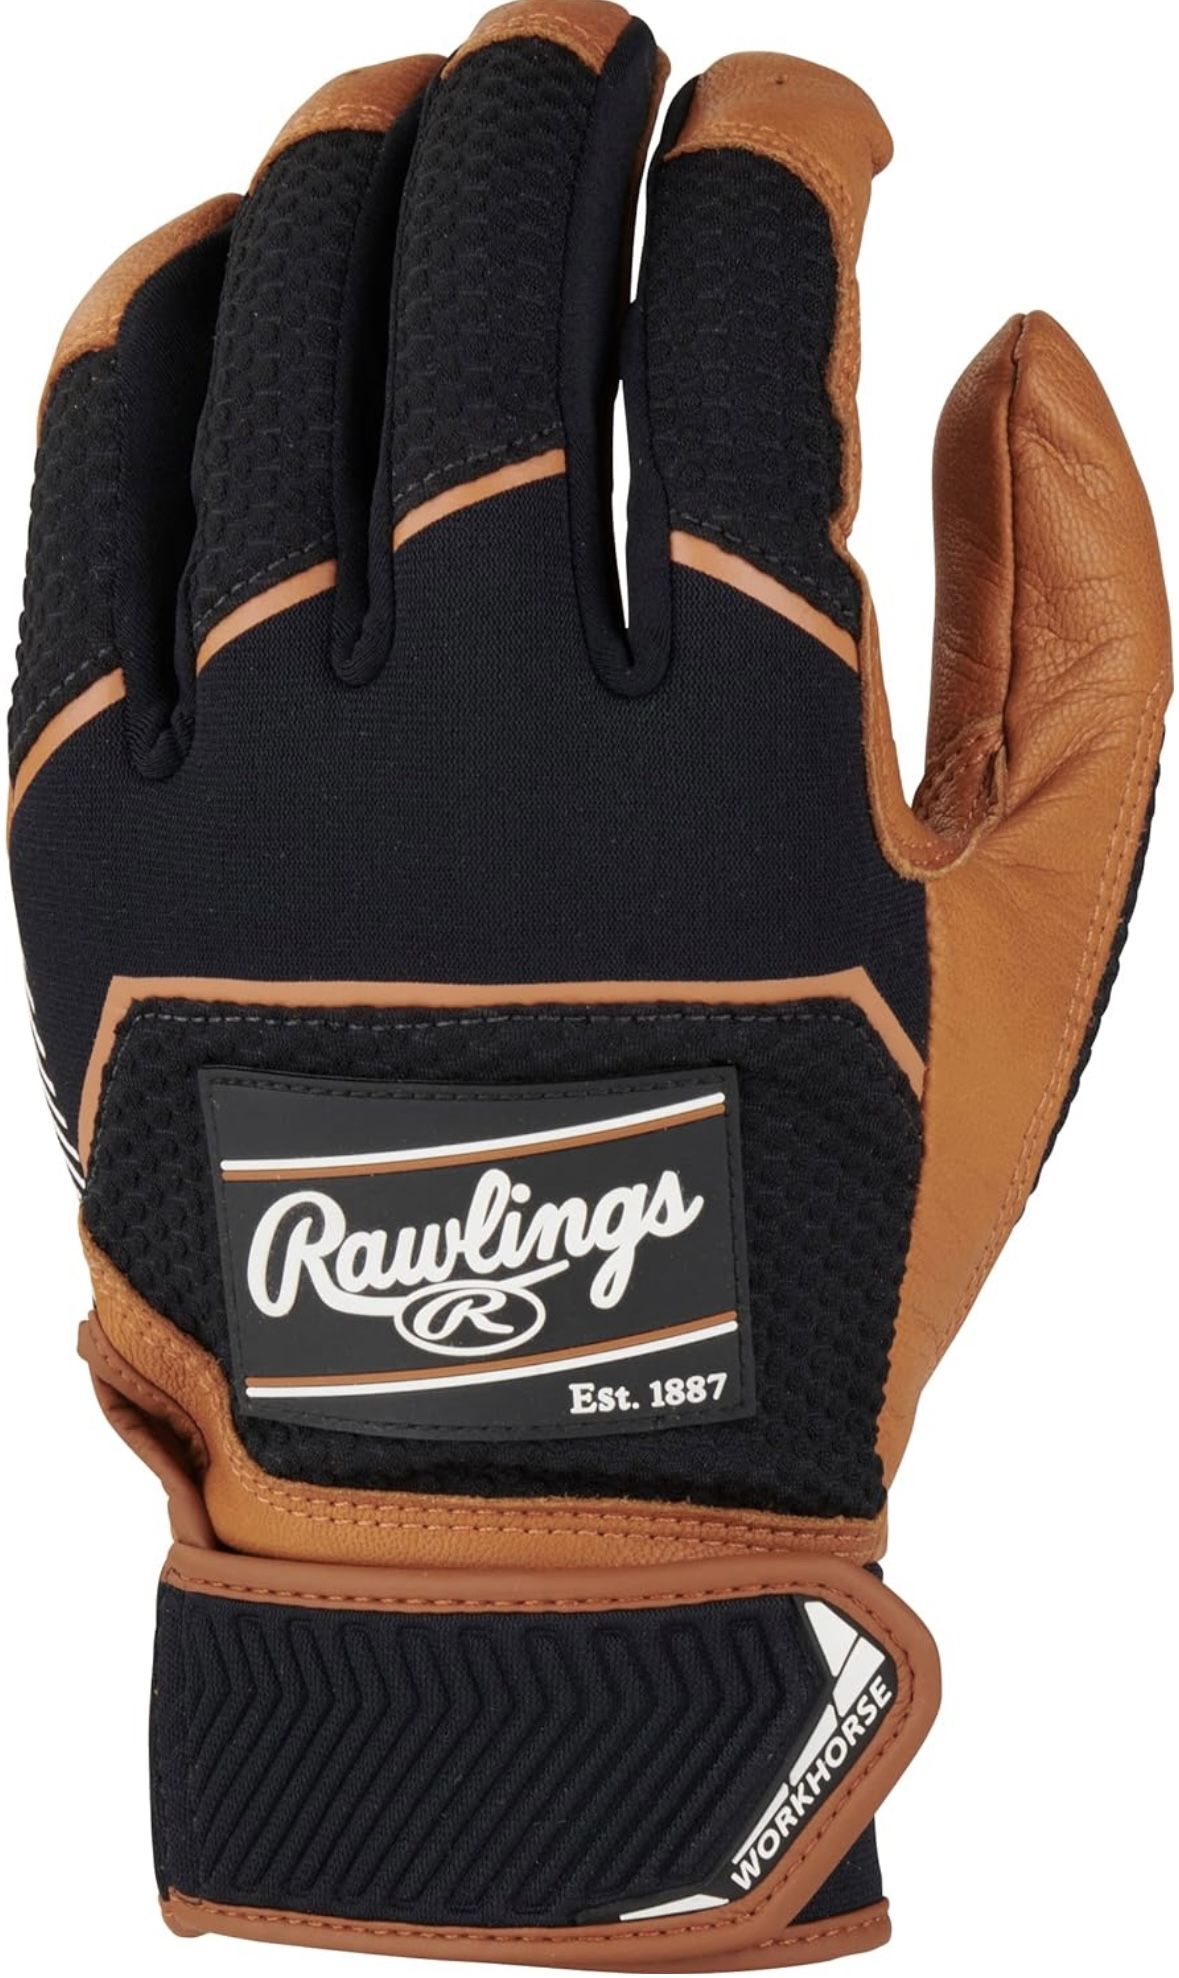 Rawlings Adult Workhorse Batting gloves Black